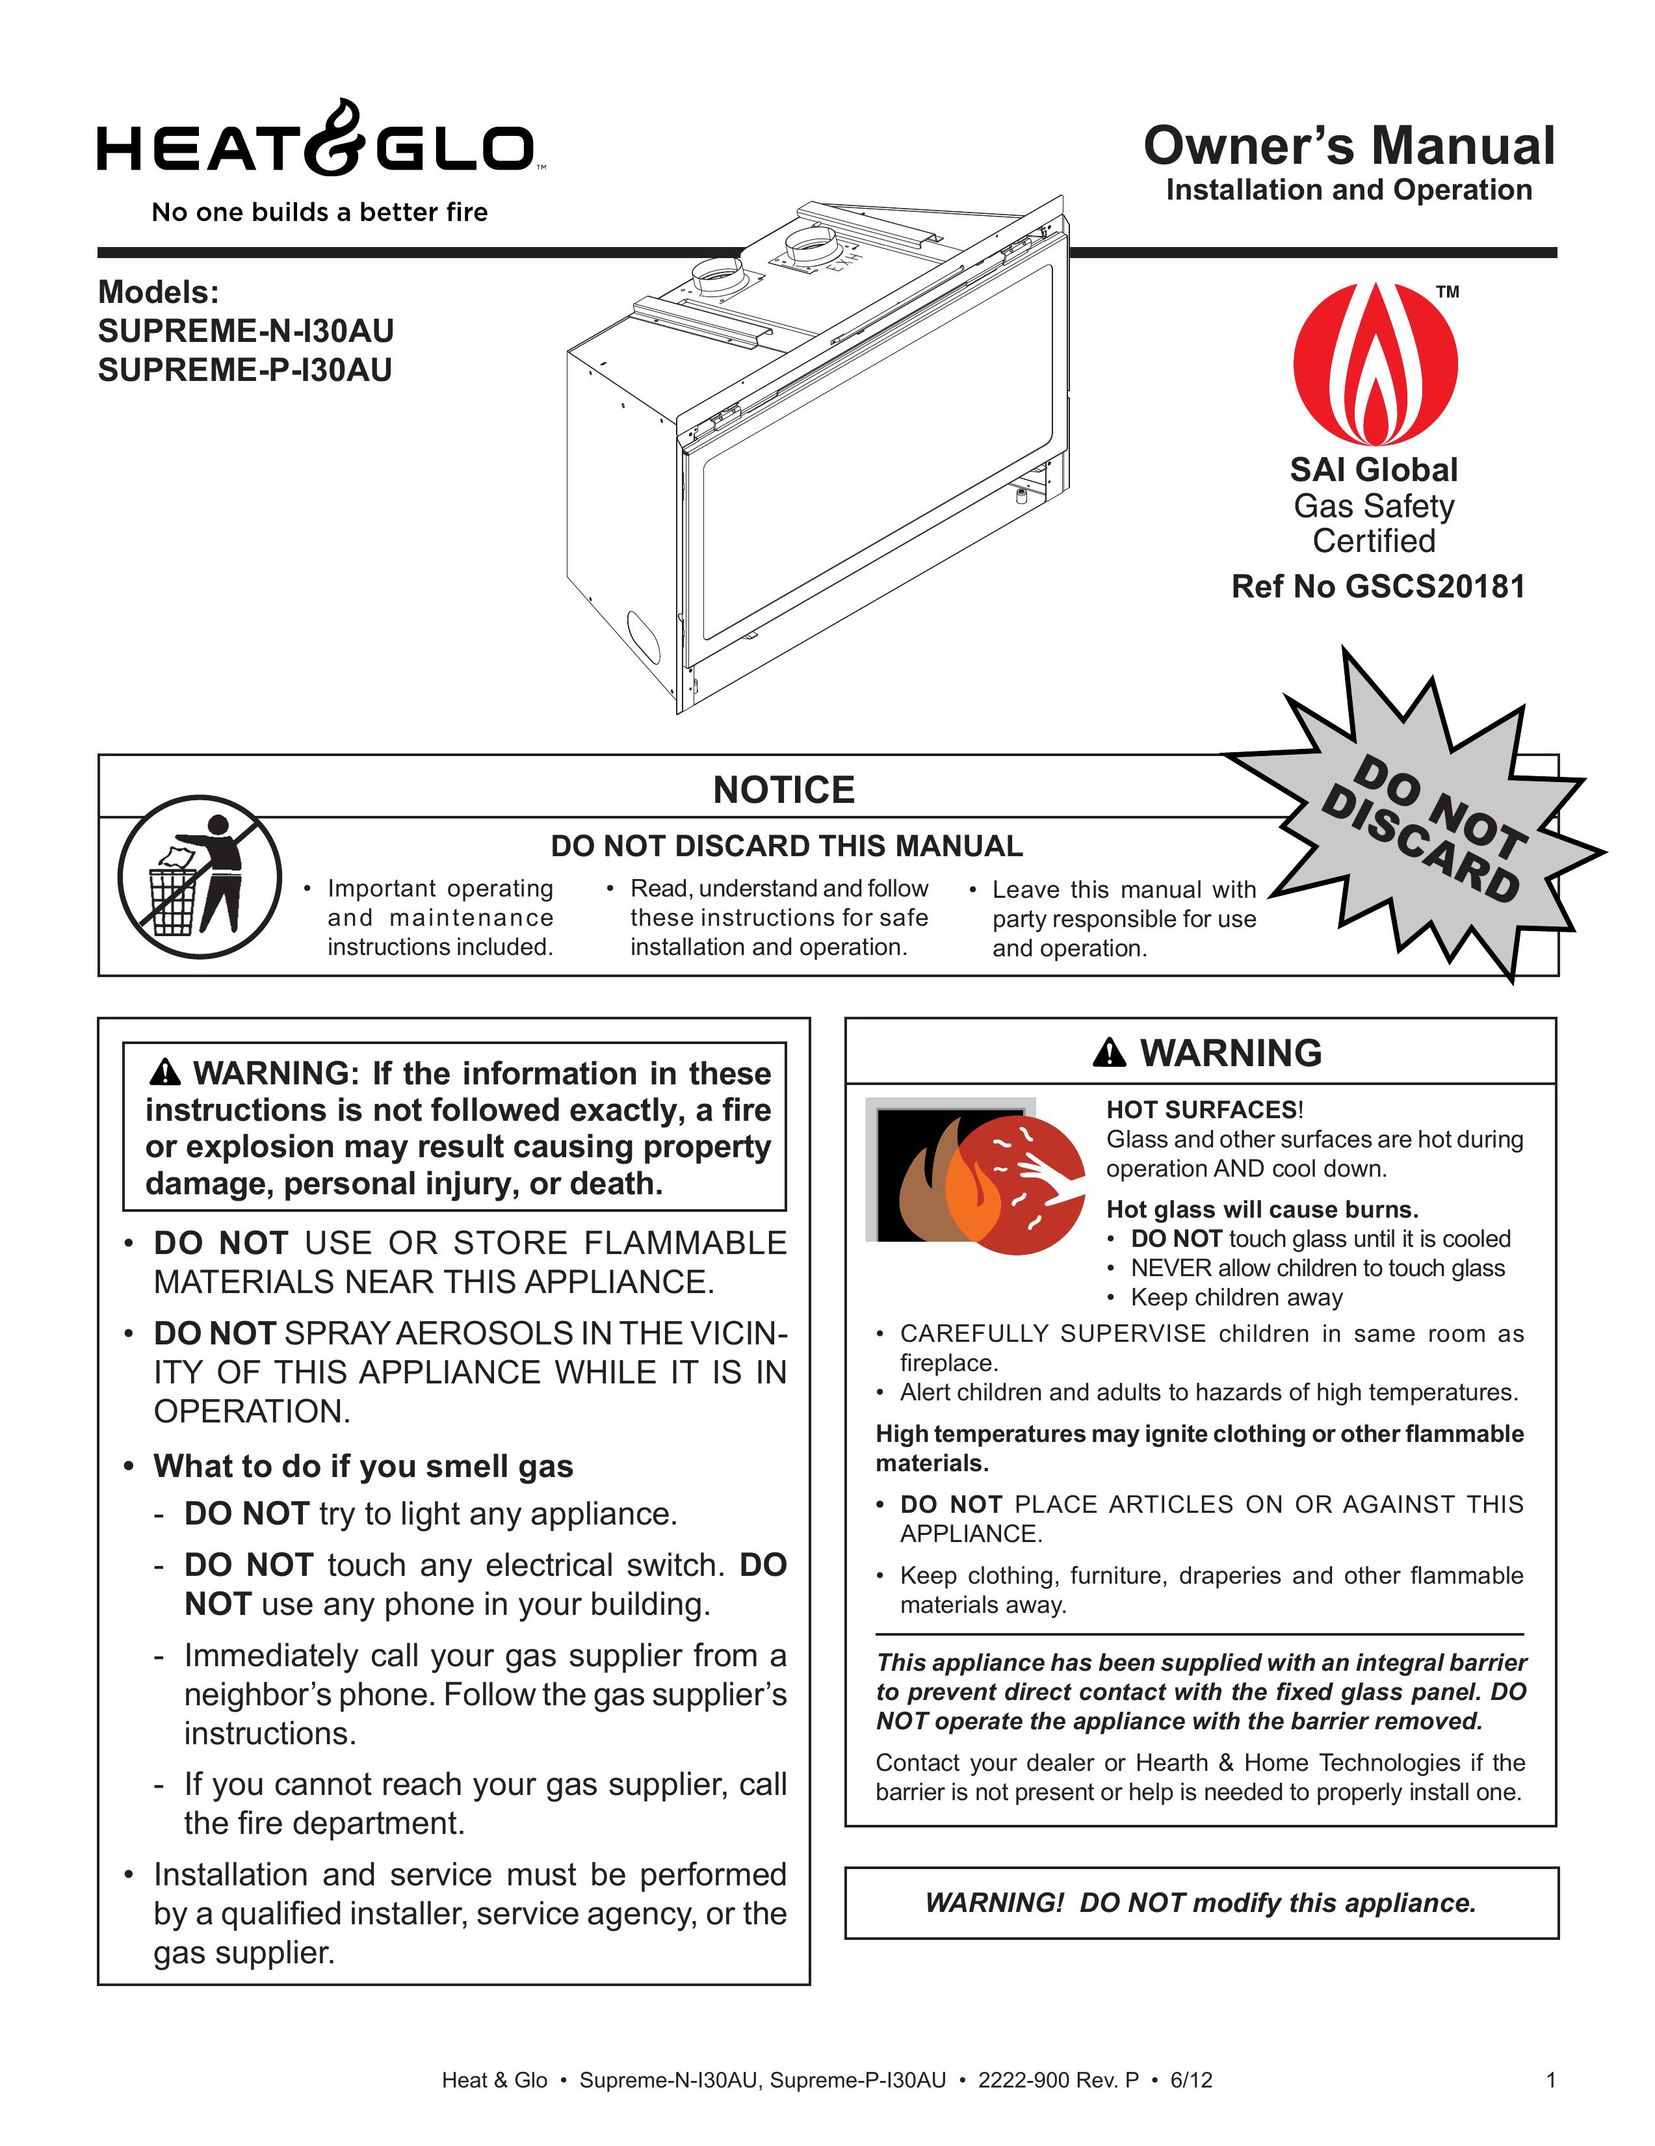 Heat & Glo LifeStyle SUPREME-N-I30AU Electric Heater User Manual